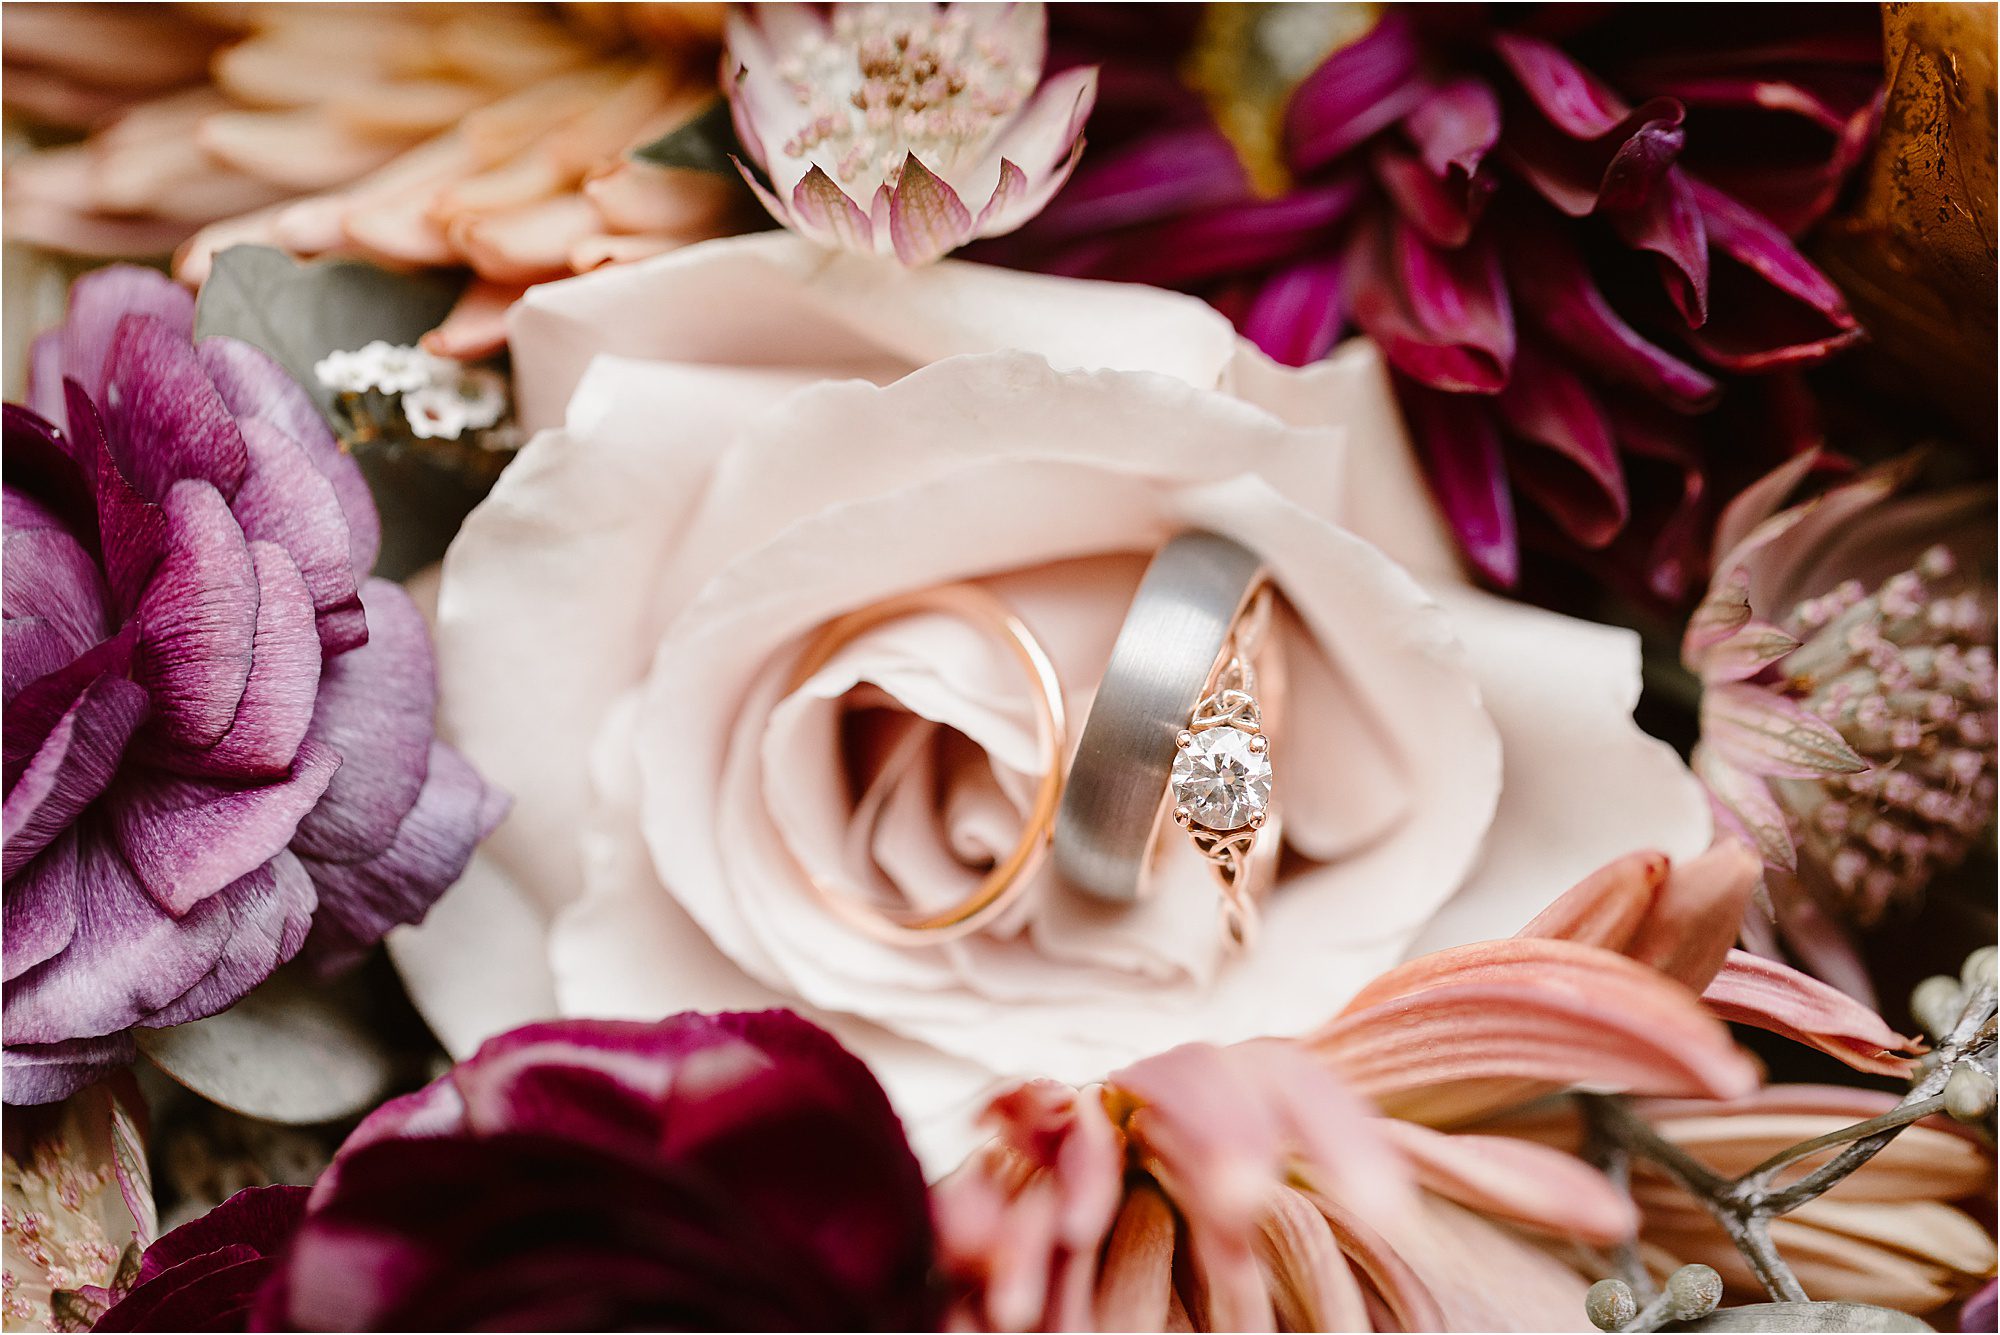 wedding rings on a pink rose